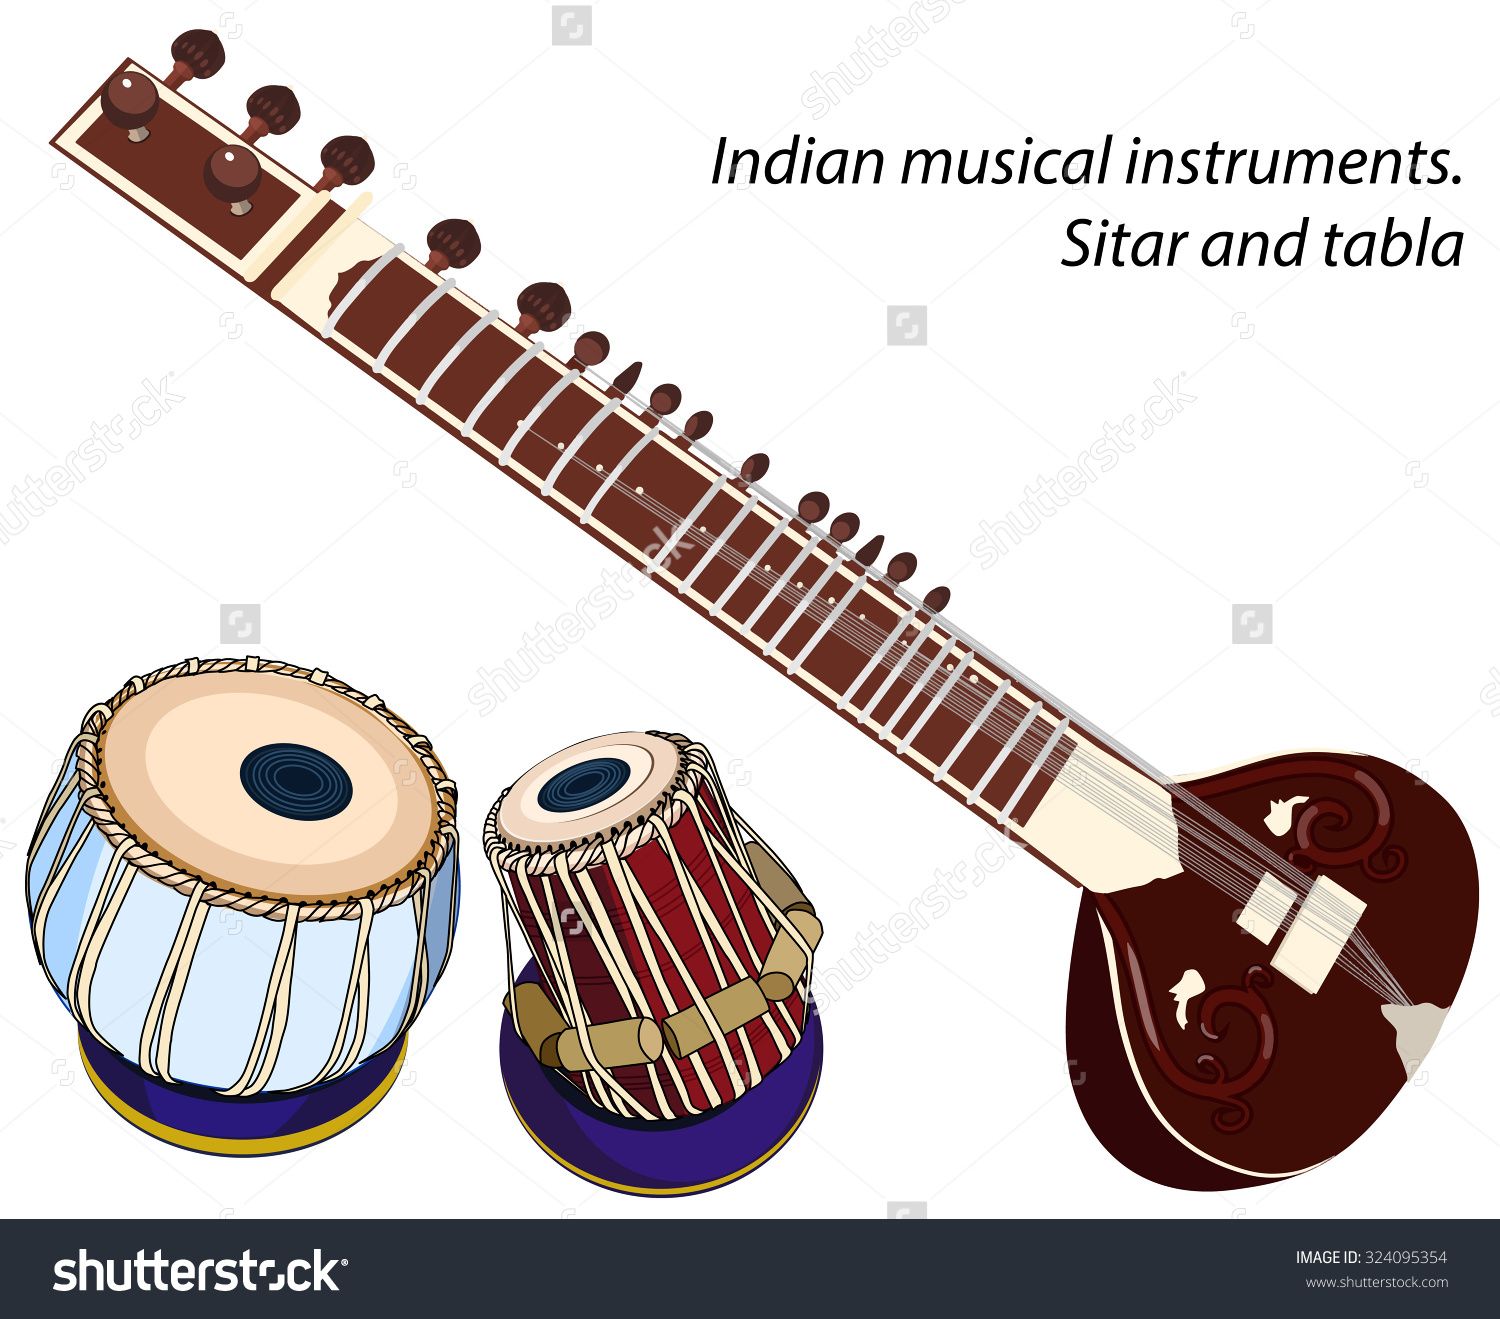 Indian musical instruments sitar. Banjo clipart veena